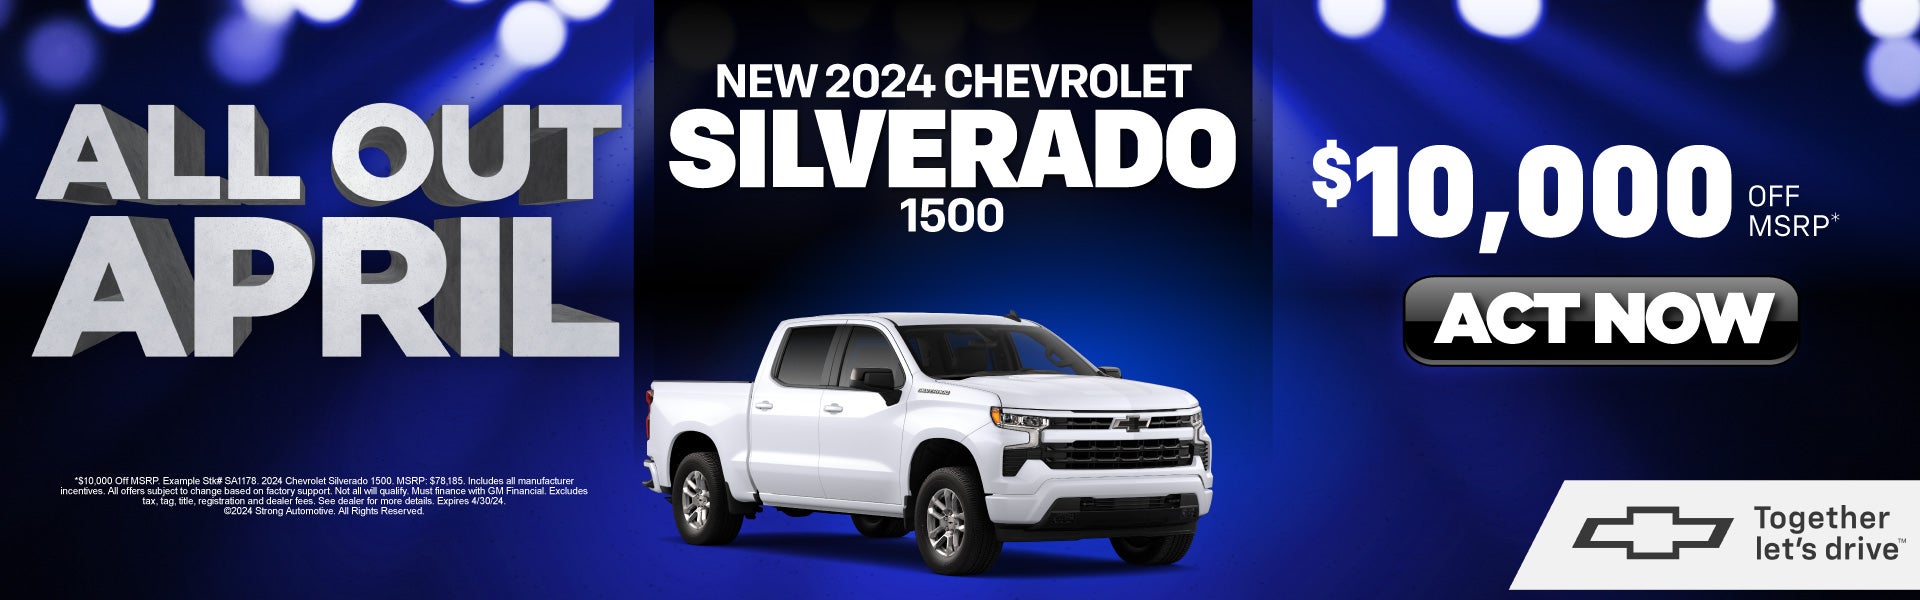 2024 Chevy Silverado 1500 $10,000 off msrp | act now